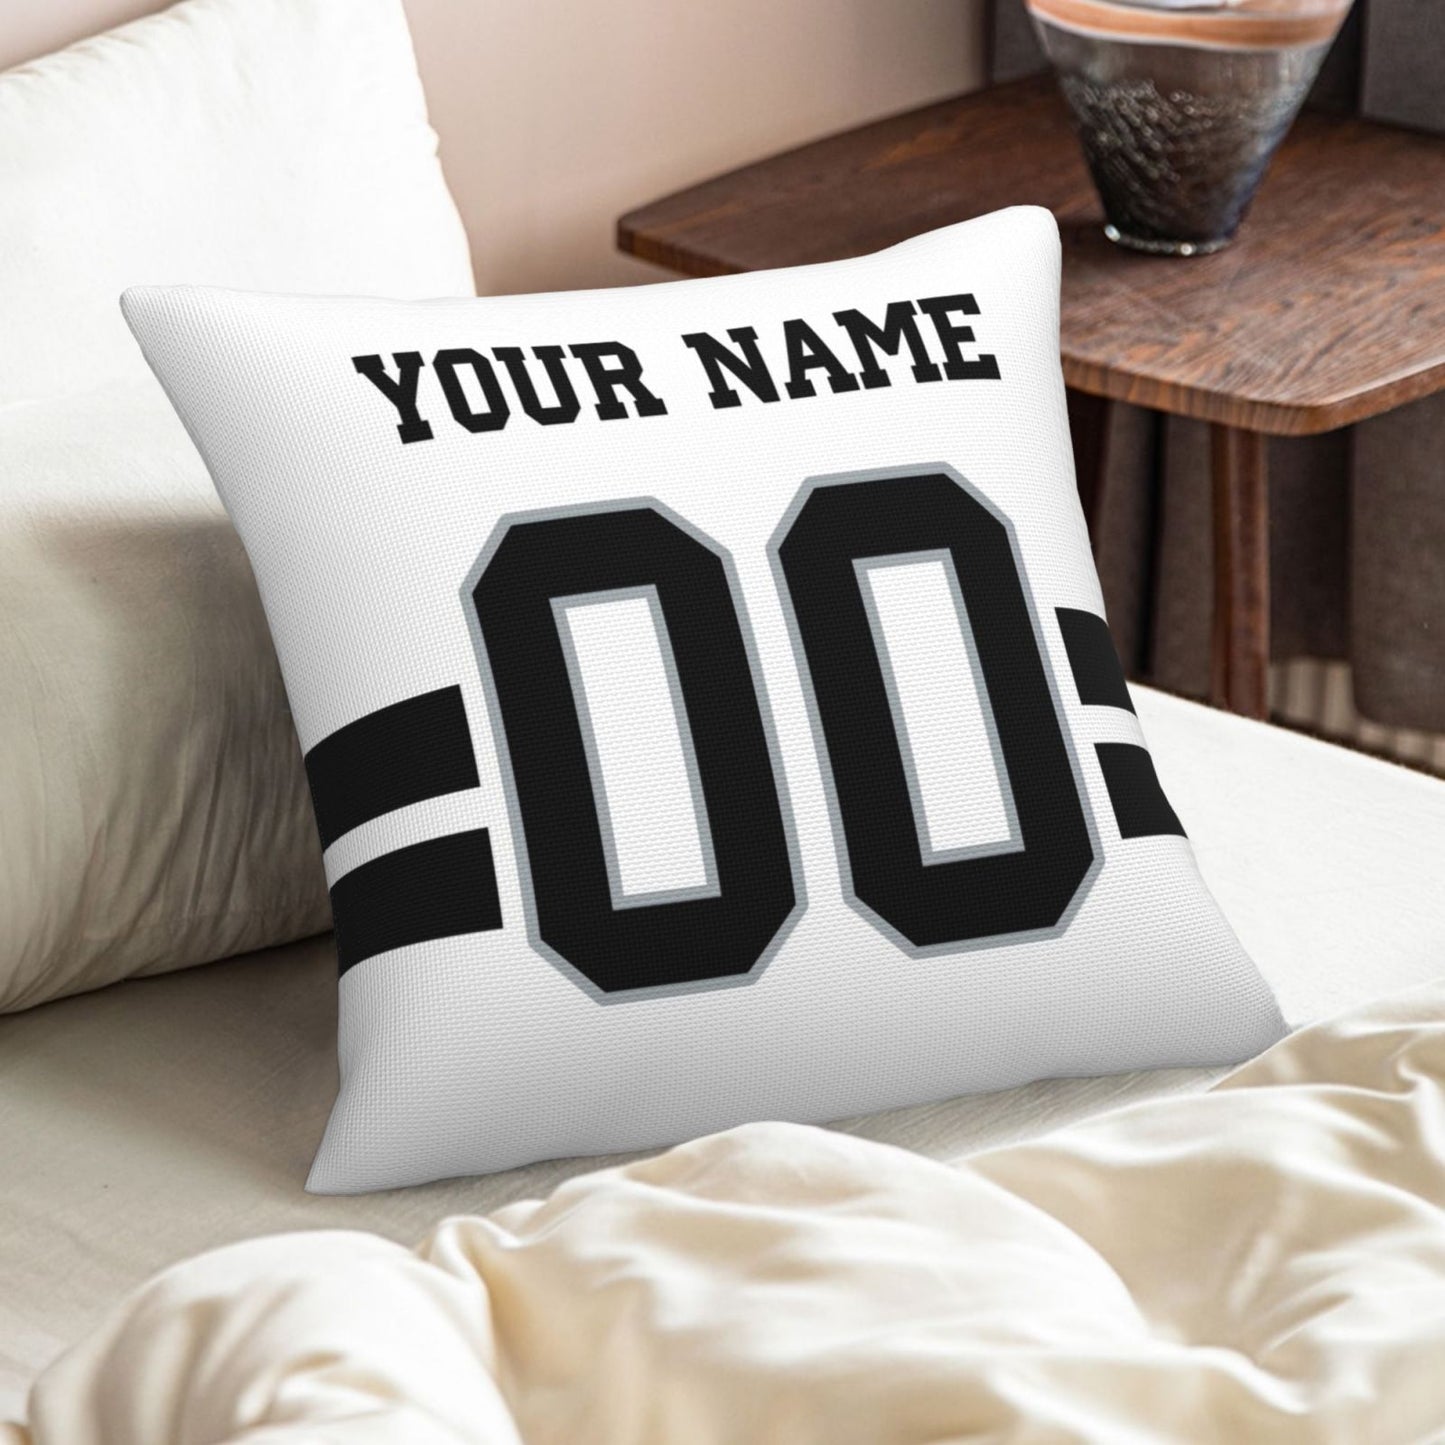 Custom White Las Vegas Raiders Decorative Throw Pillow Case - Print Personalized Football Team Fans Name & Number Birthday Gift